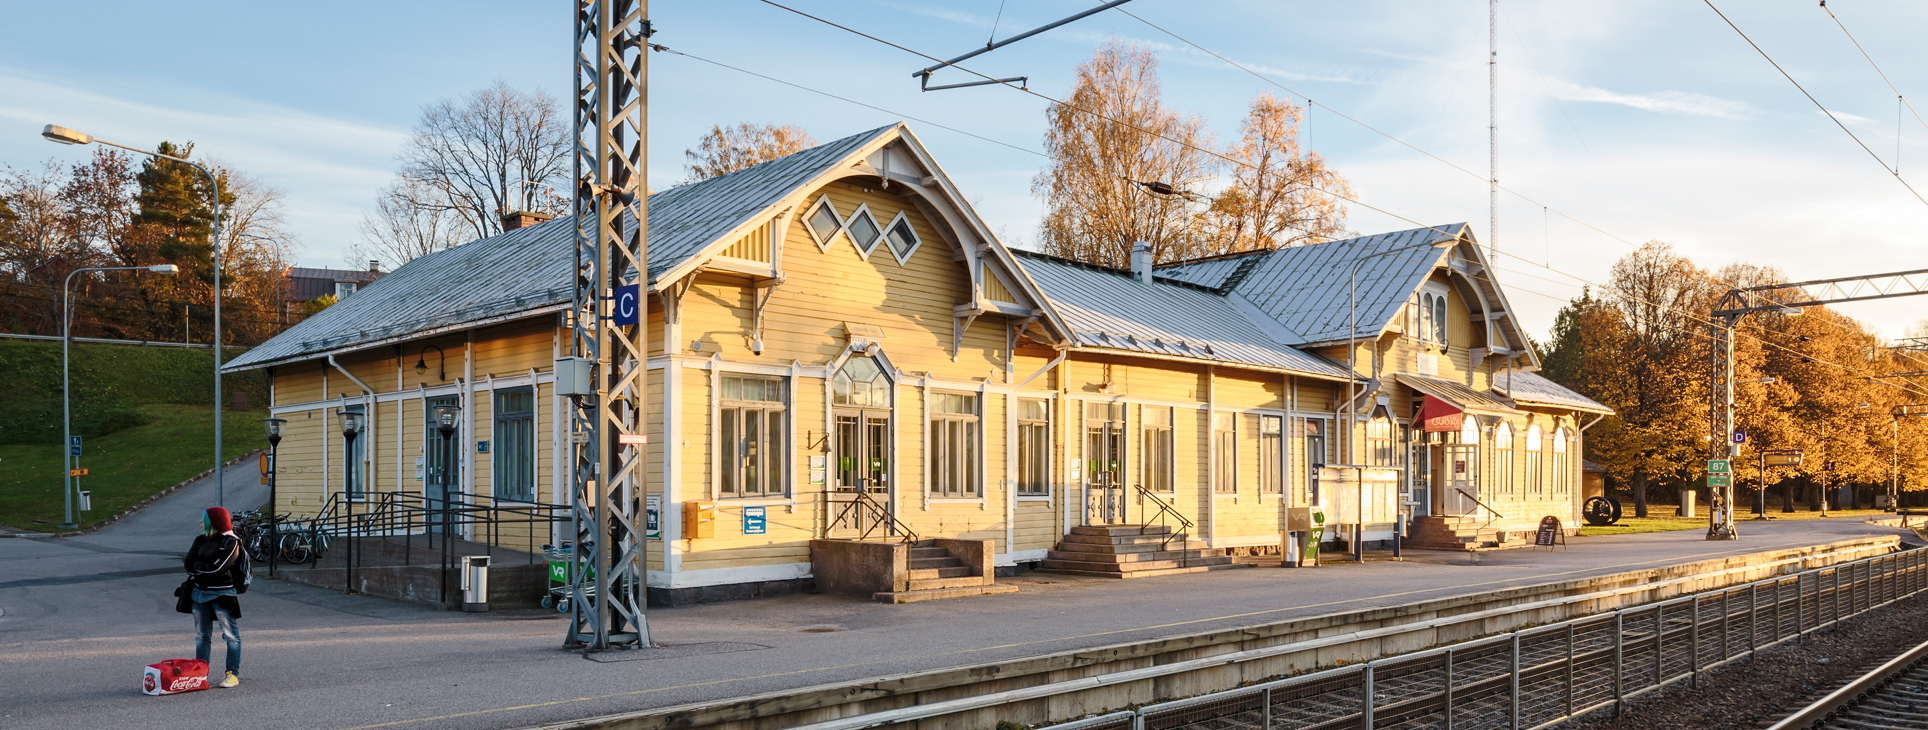 Karjaa railway station - VR